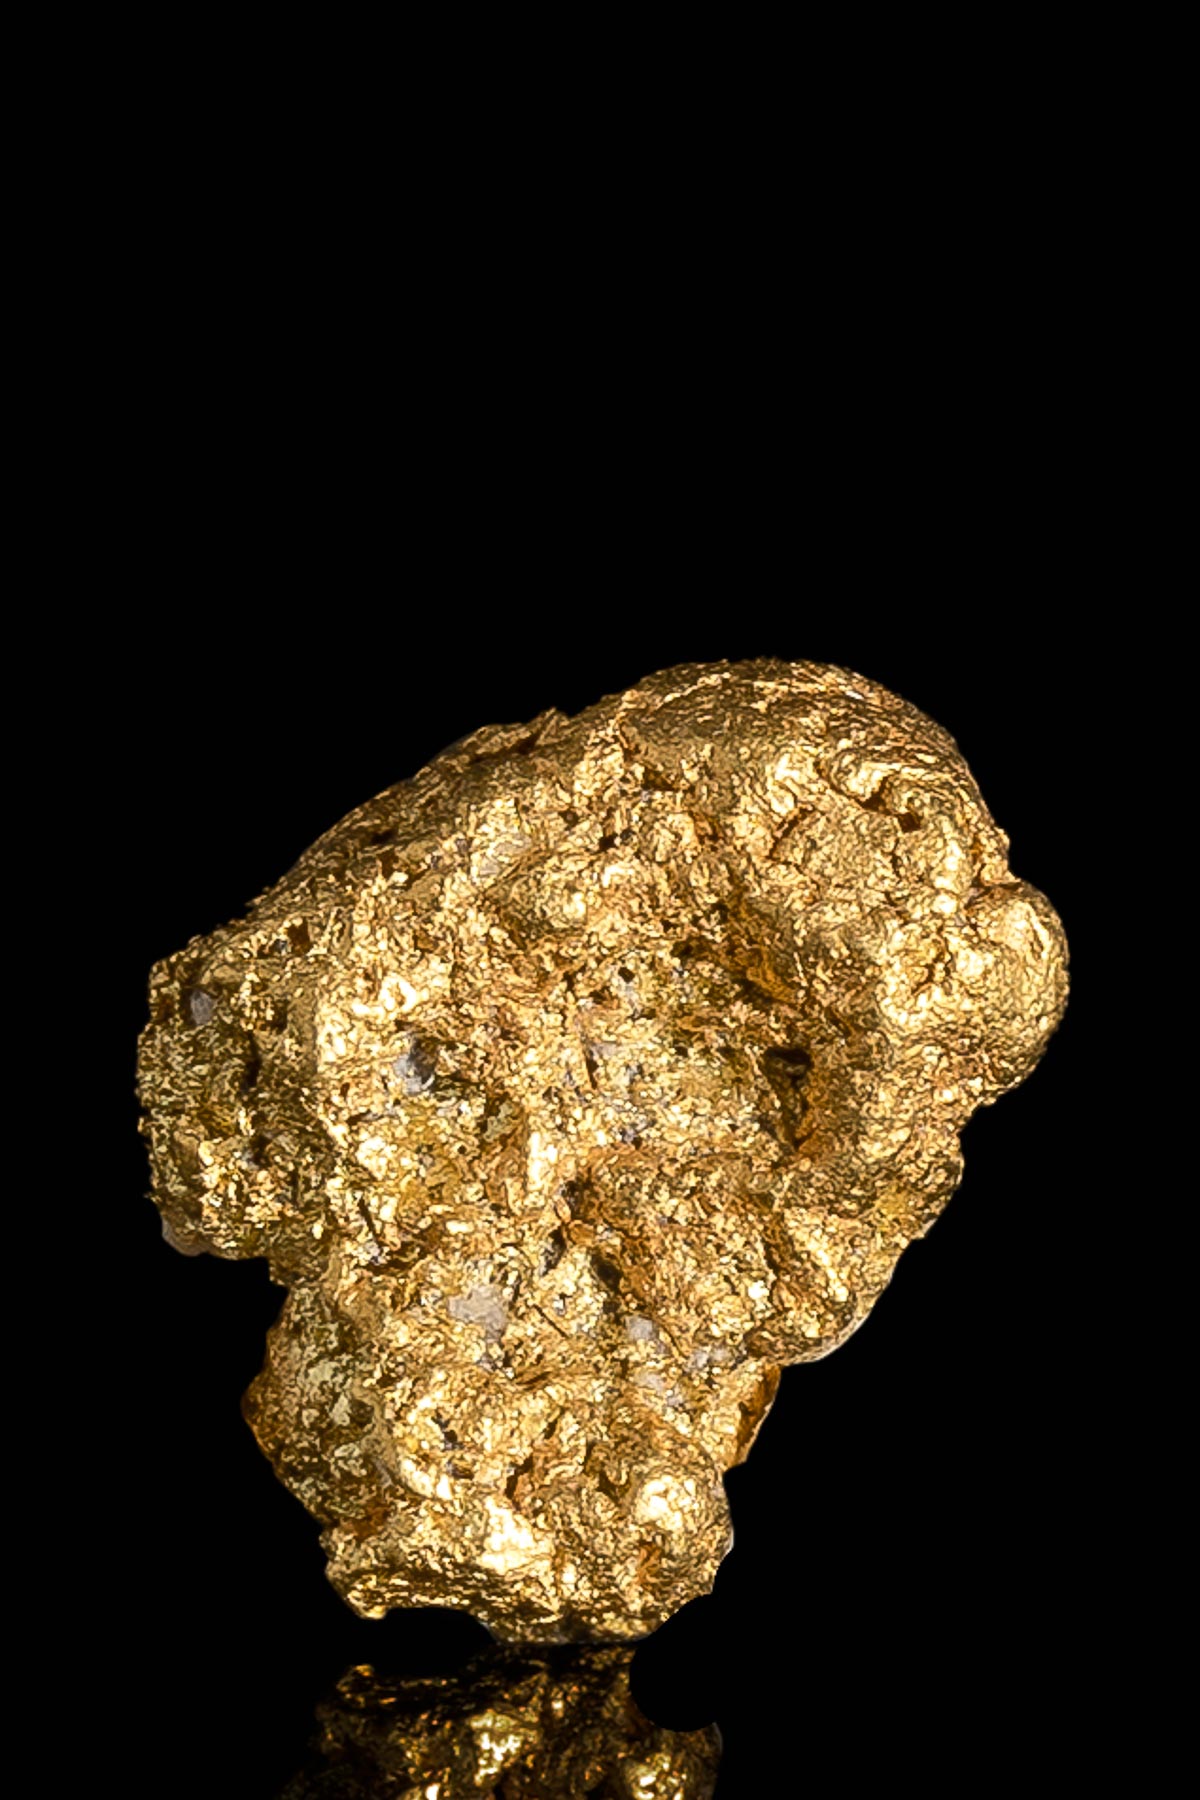 Rounded Rugged Yukon Natural Gold Nugget - 3.21 grams